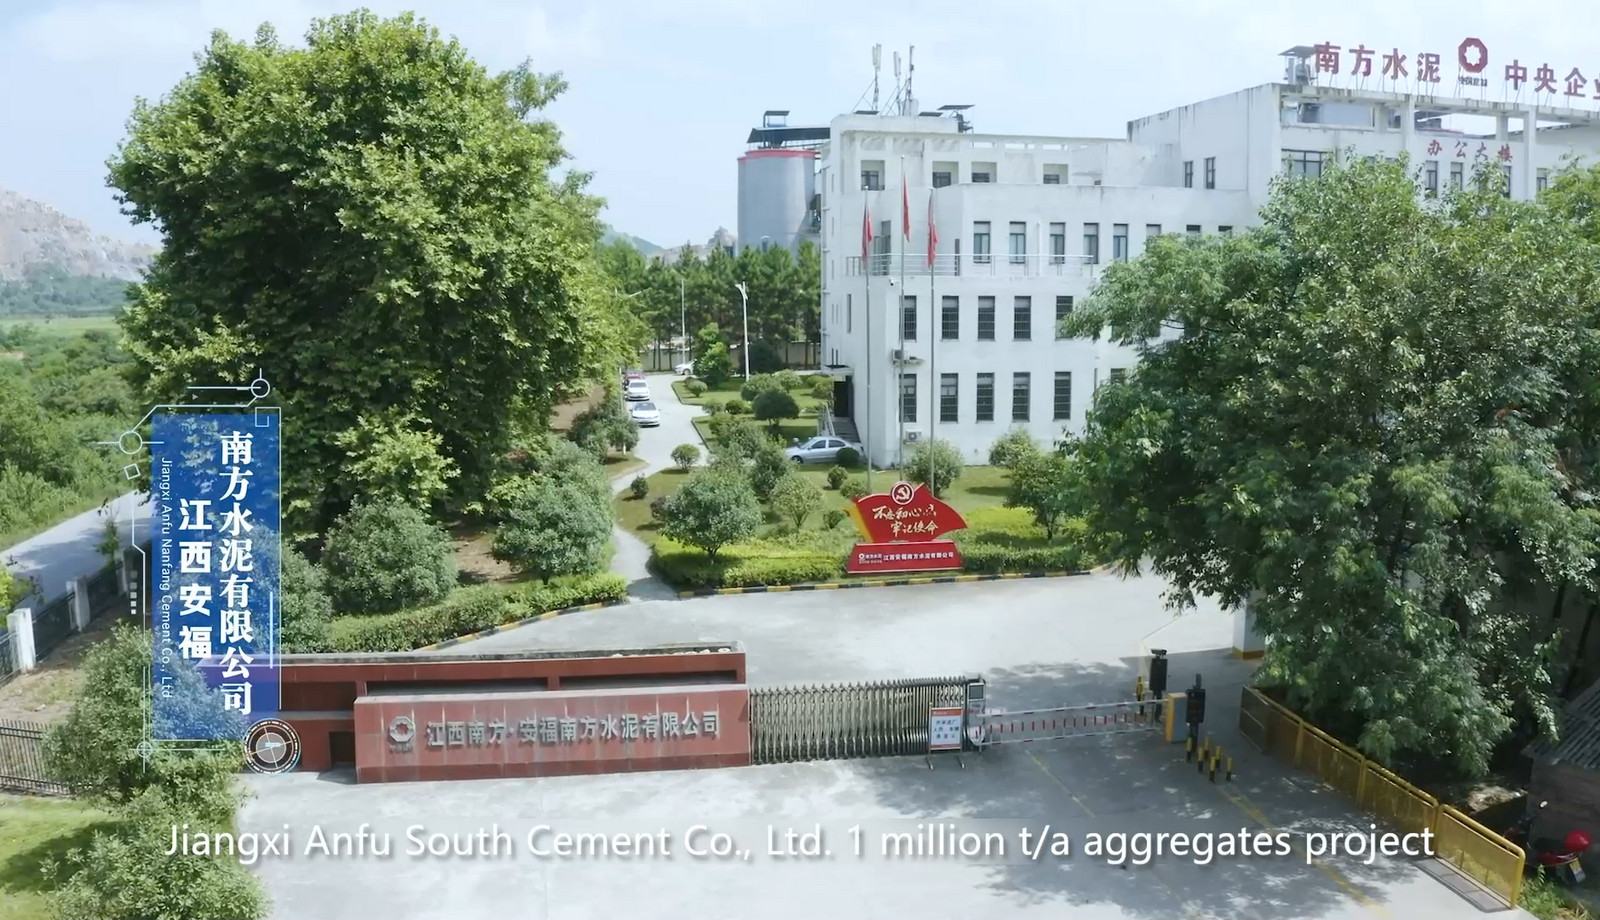 Jiangxi Anfu South Cement Co., Ltd. One Million t/a Aggregates Project